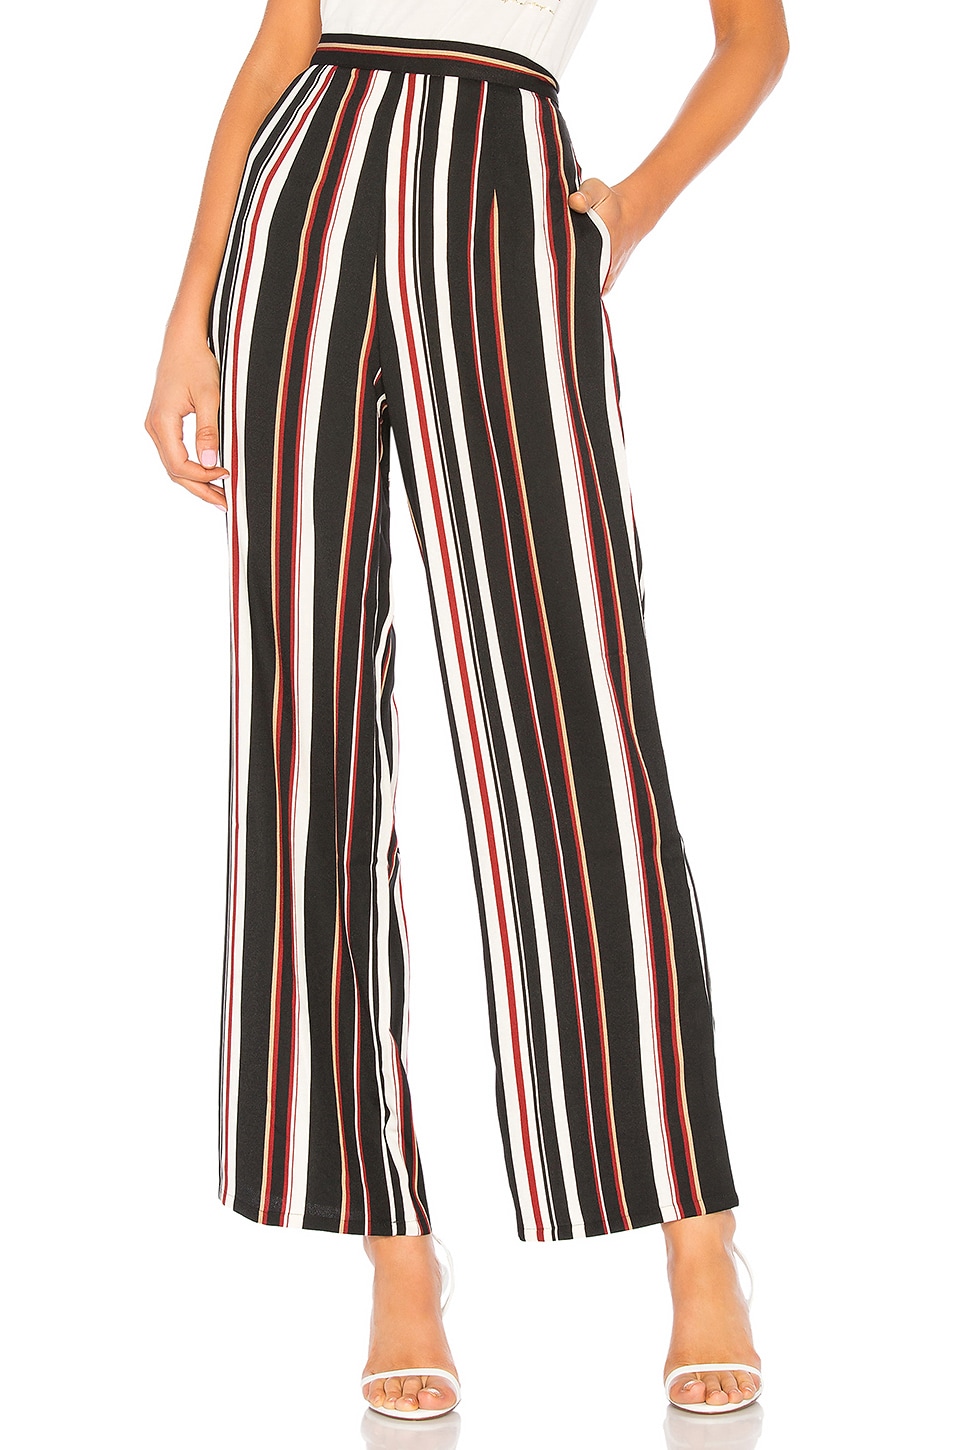 About Us Lenny Pants in Black Multi Stripe | REVOLVE